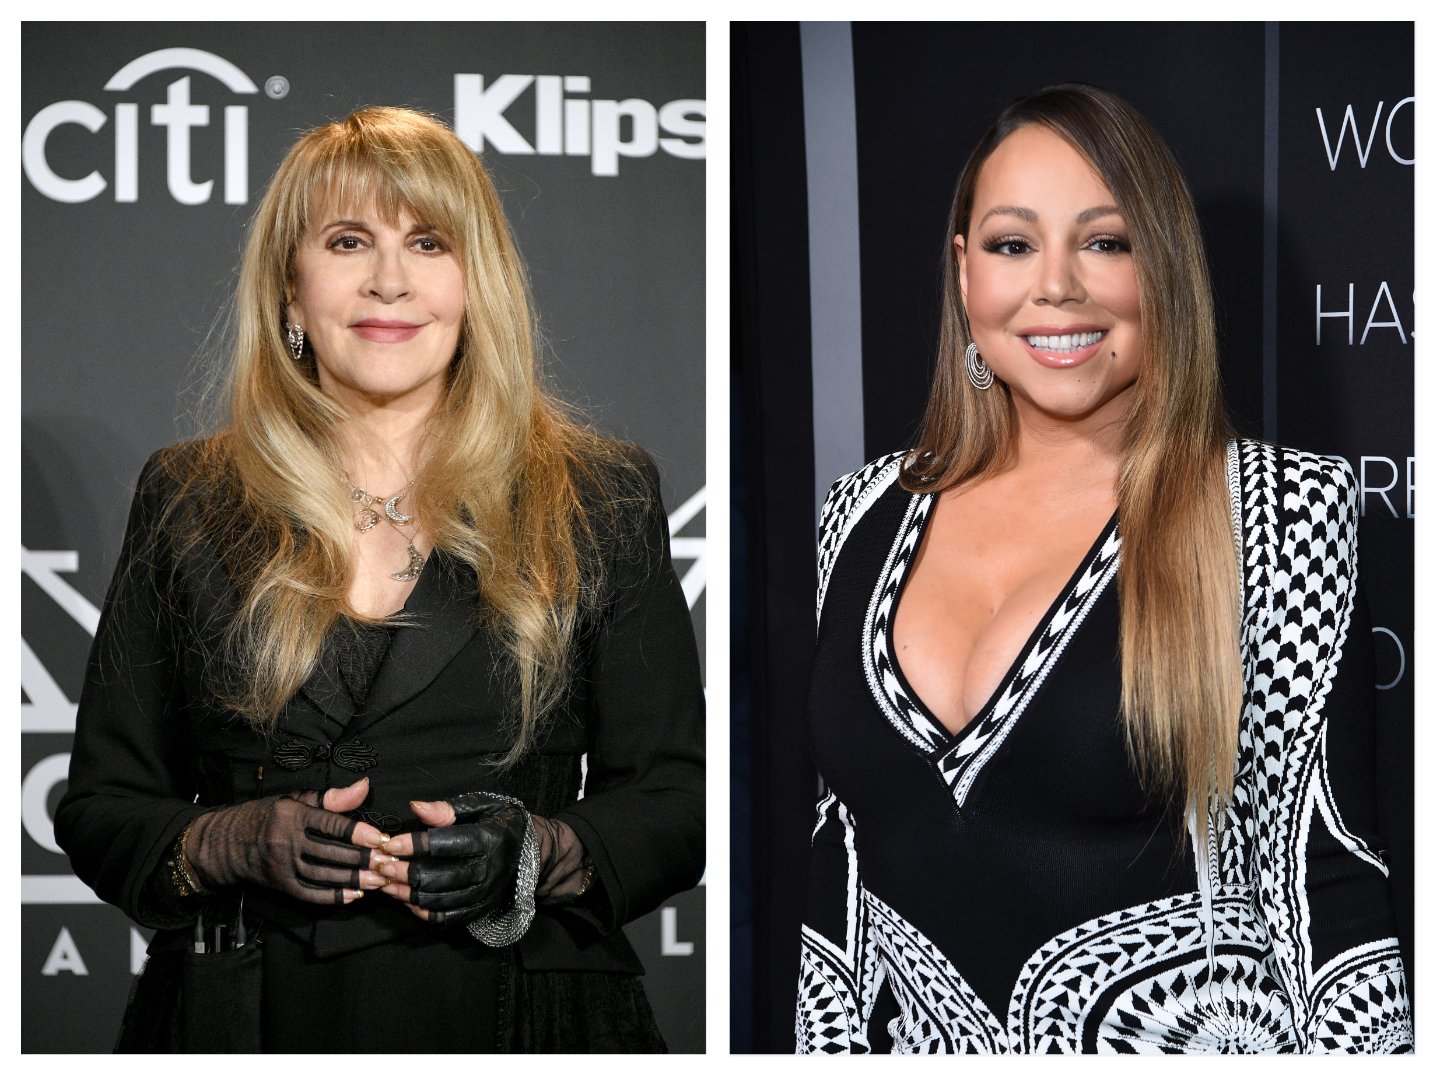 Stevie Nicks wears a black dress and black fingerless gloves against a black background. Mariah Carey wears a black and white dress against a black background.